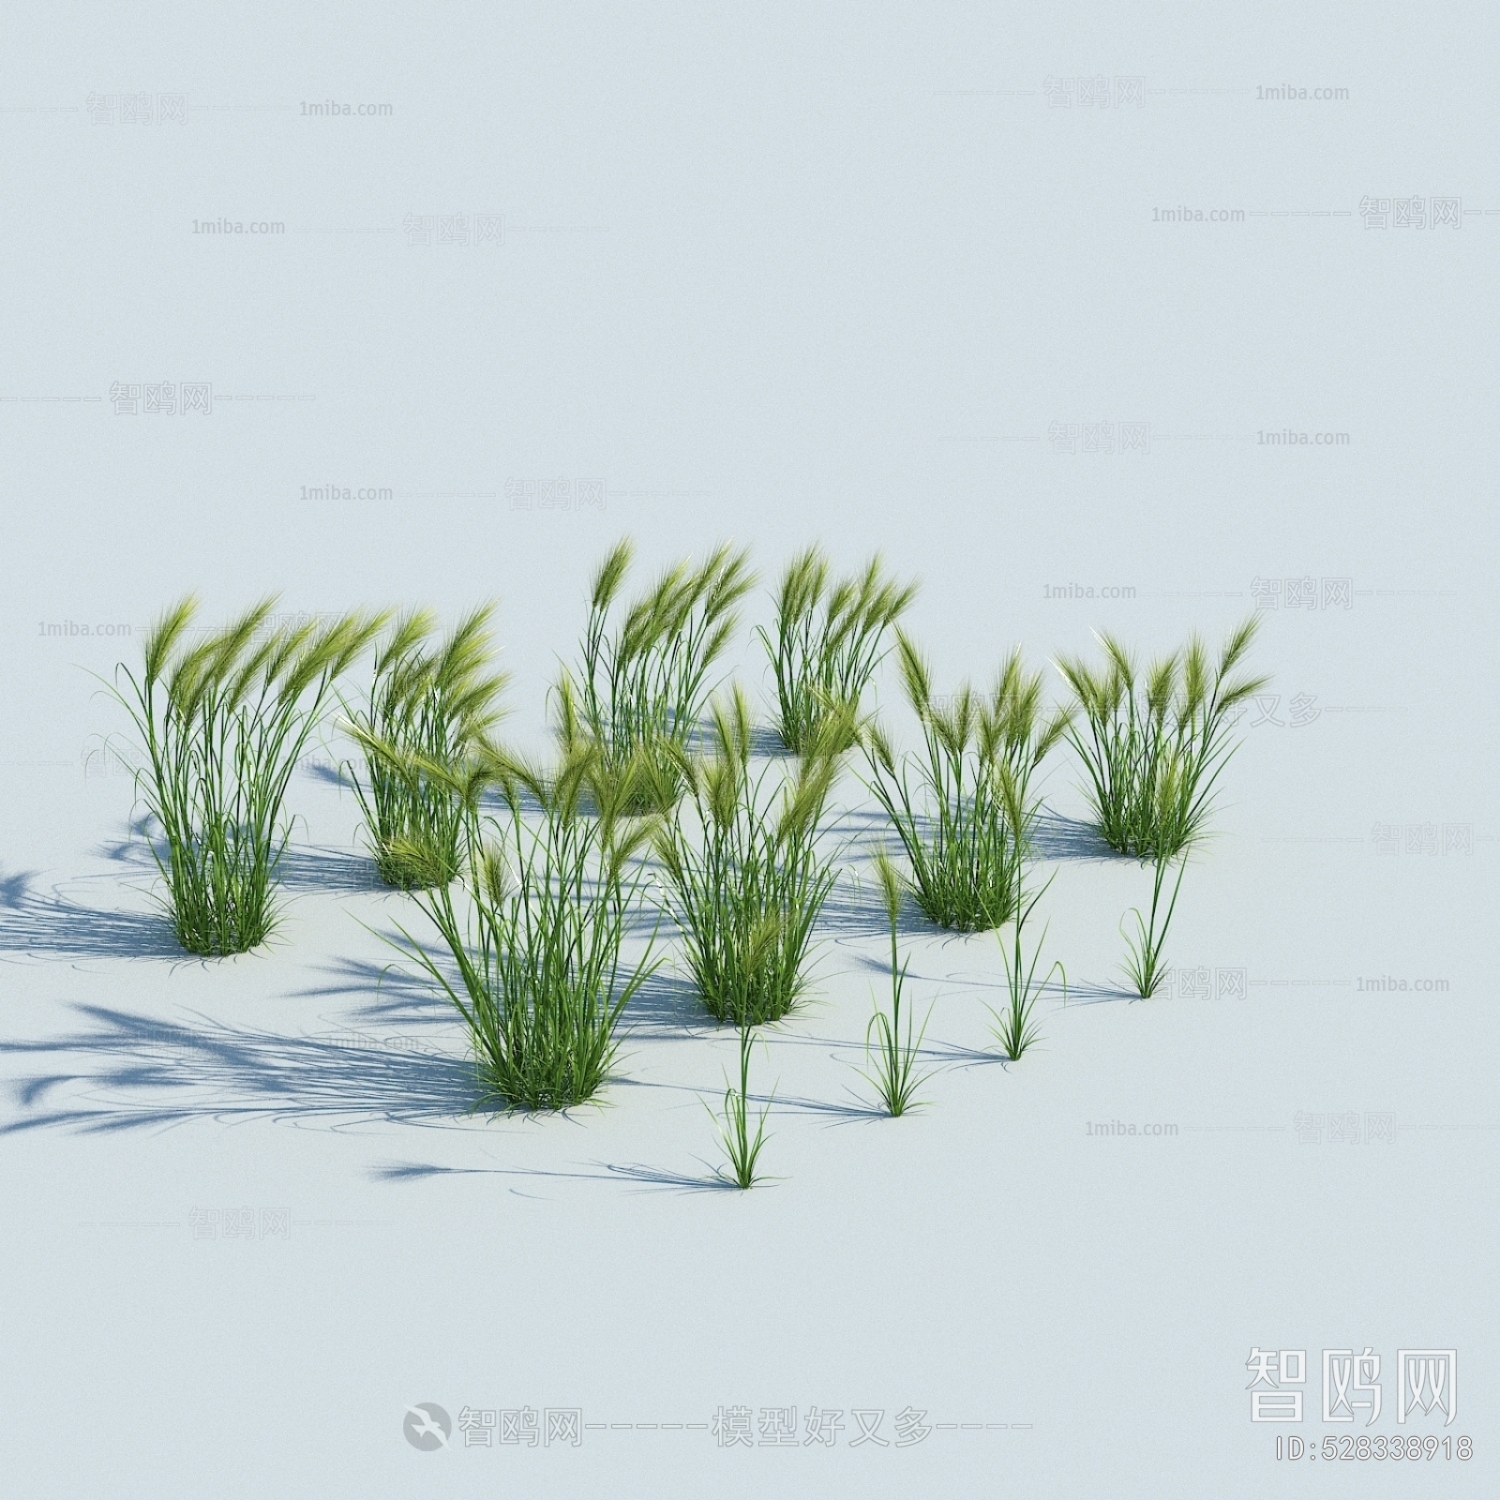 Modern Flowers And Grass